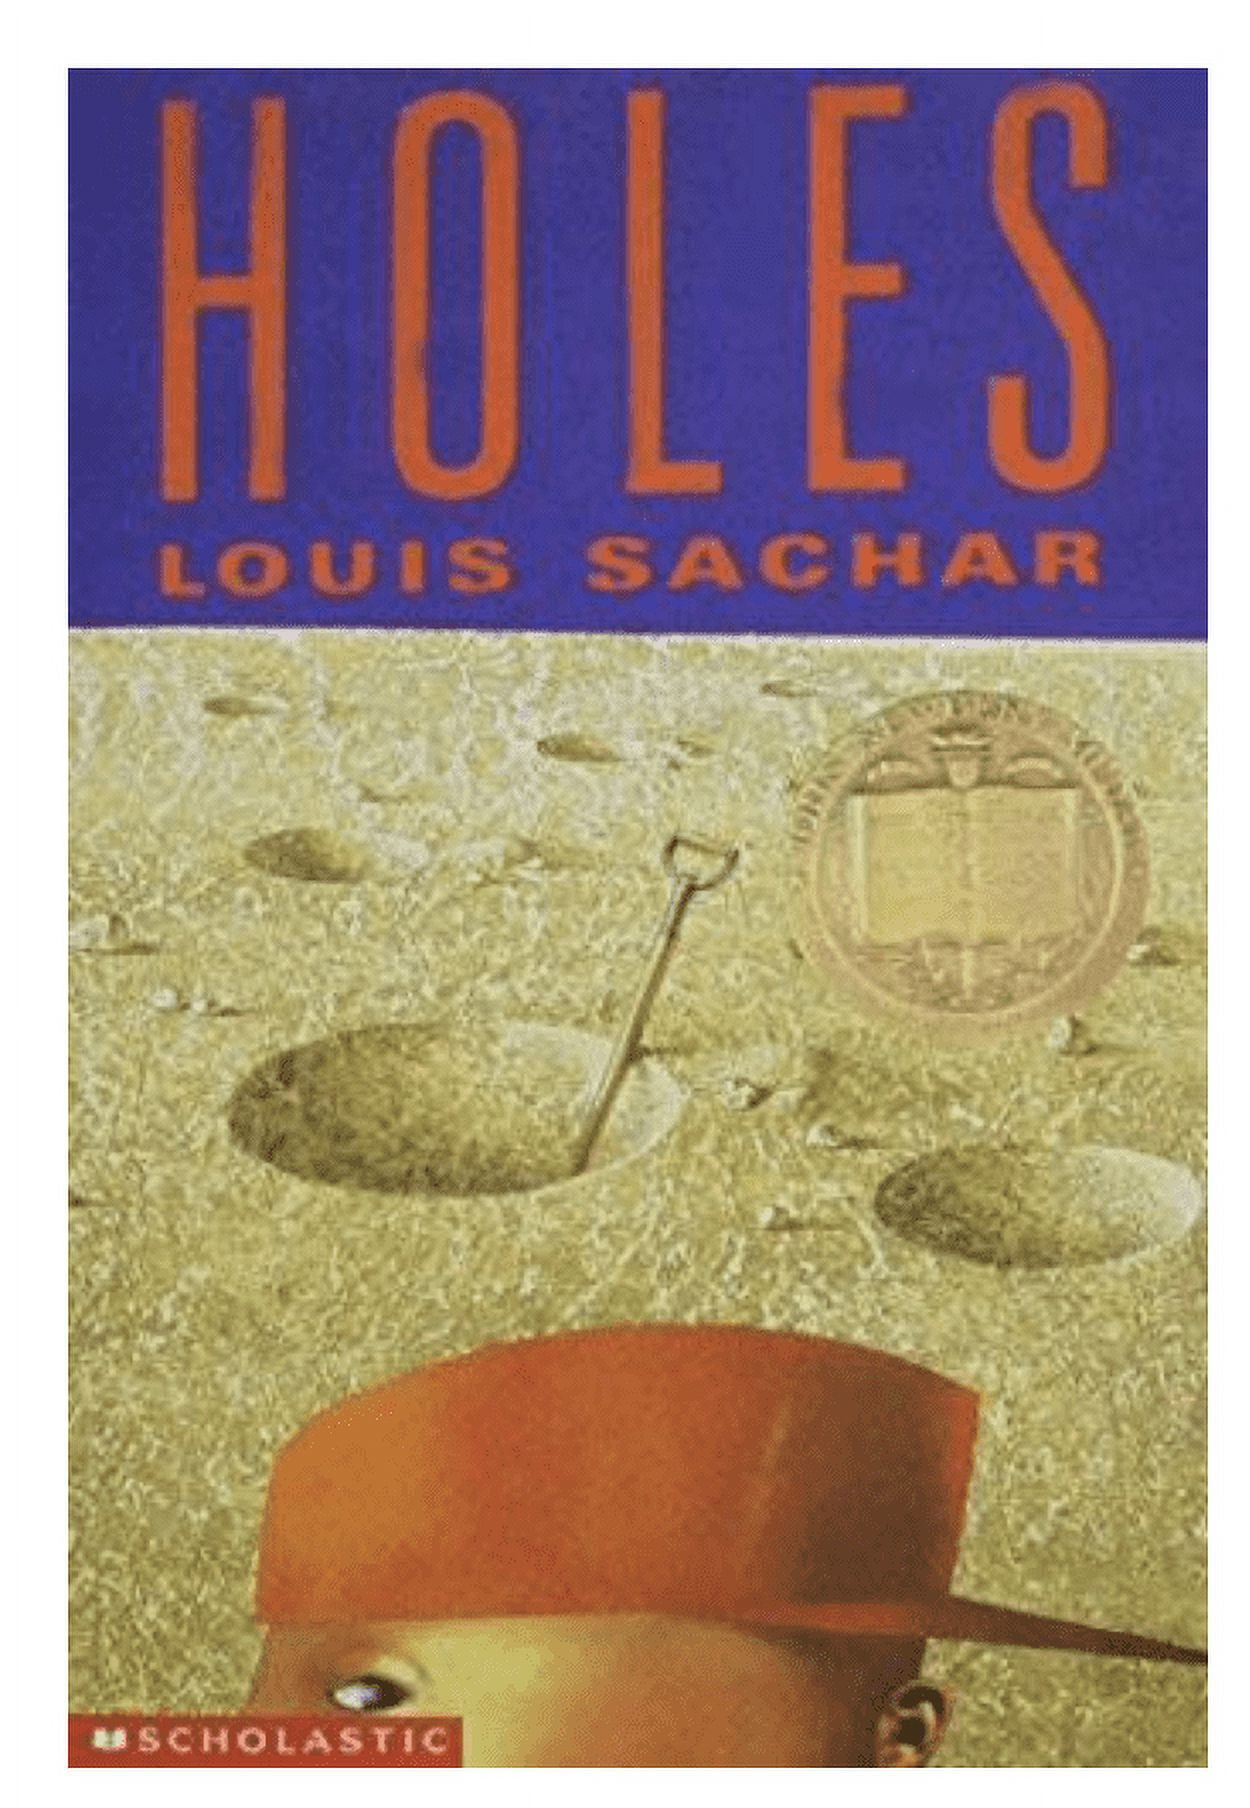 Vintage Book: 'holes' by Louis Sachar 